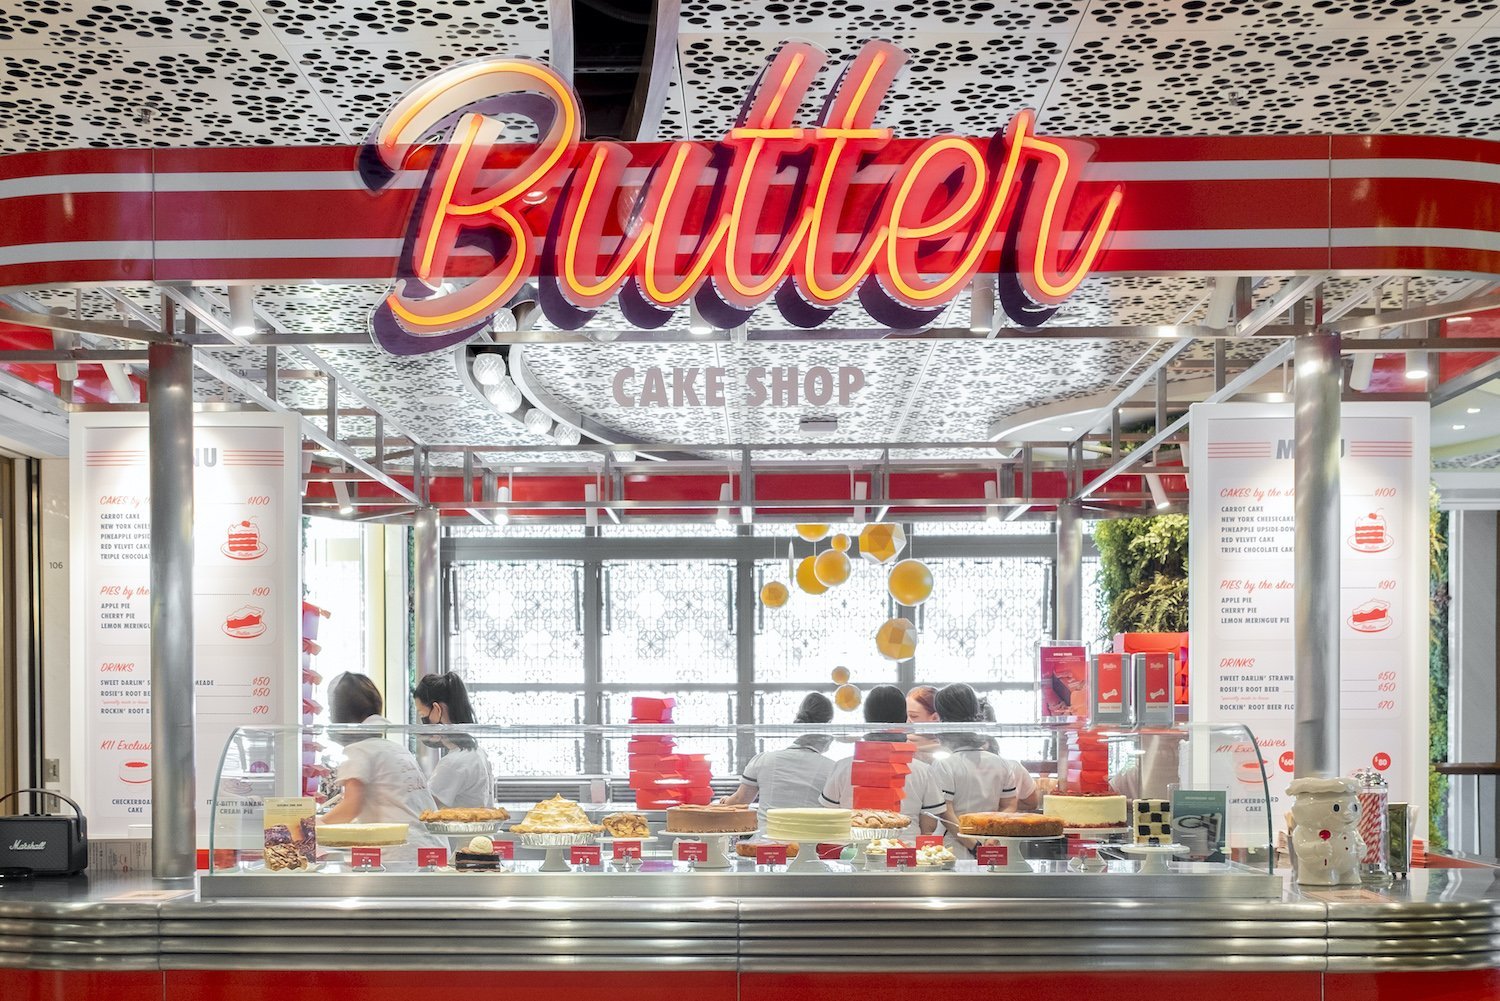 butter-cake-shop-k11-interior.jpg